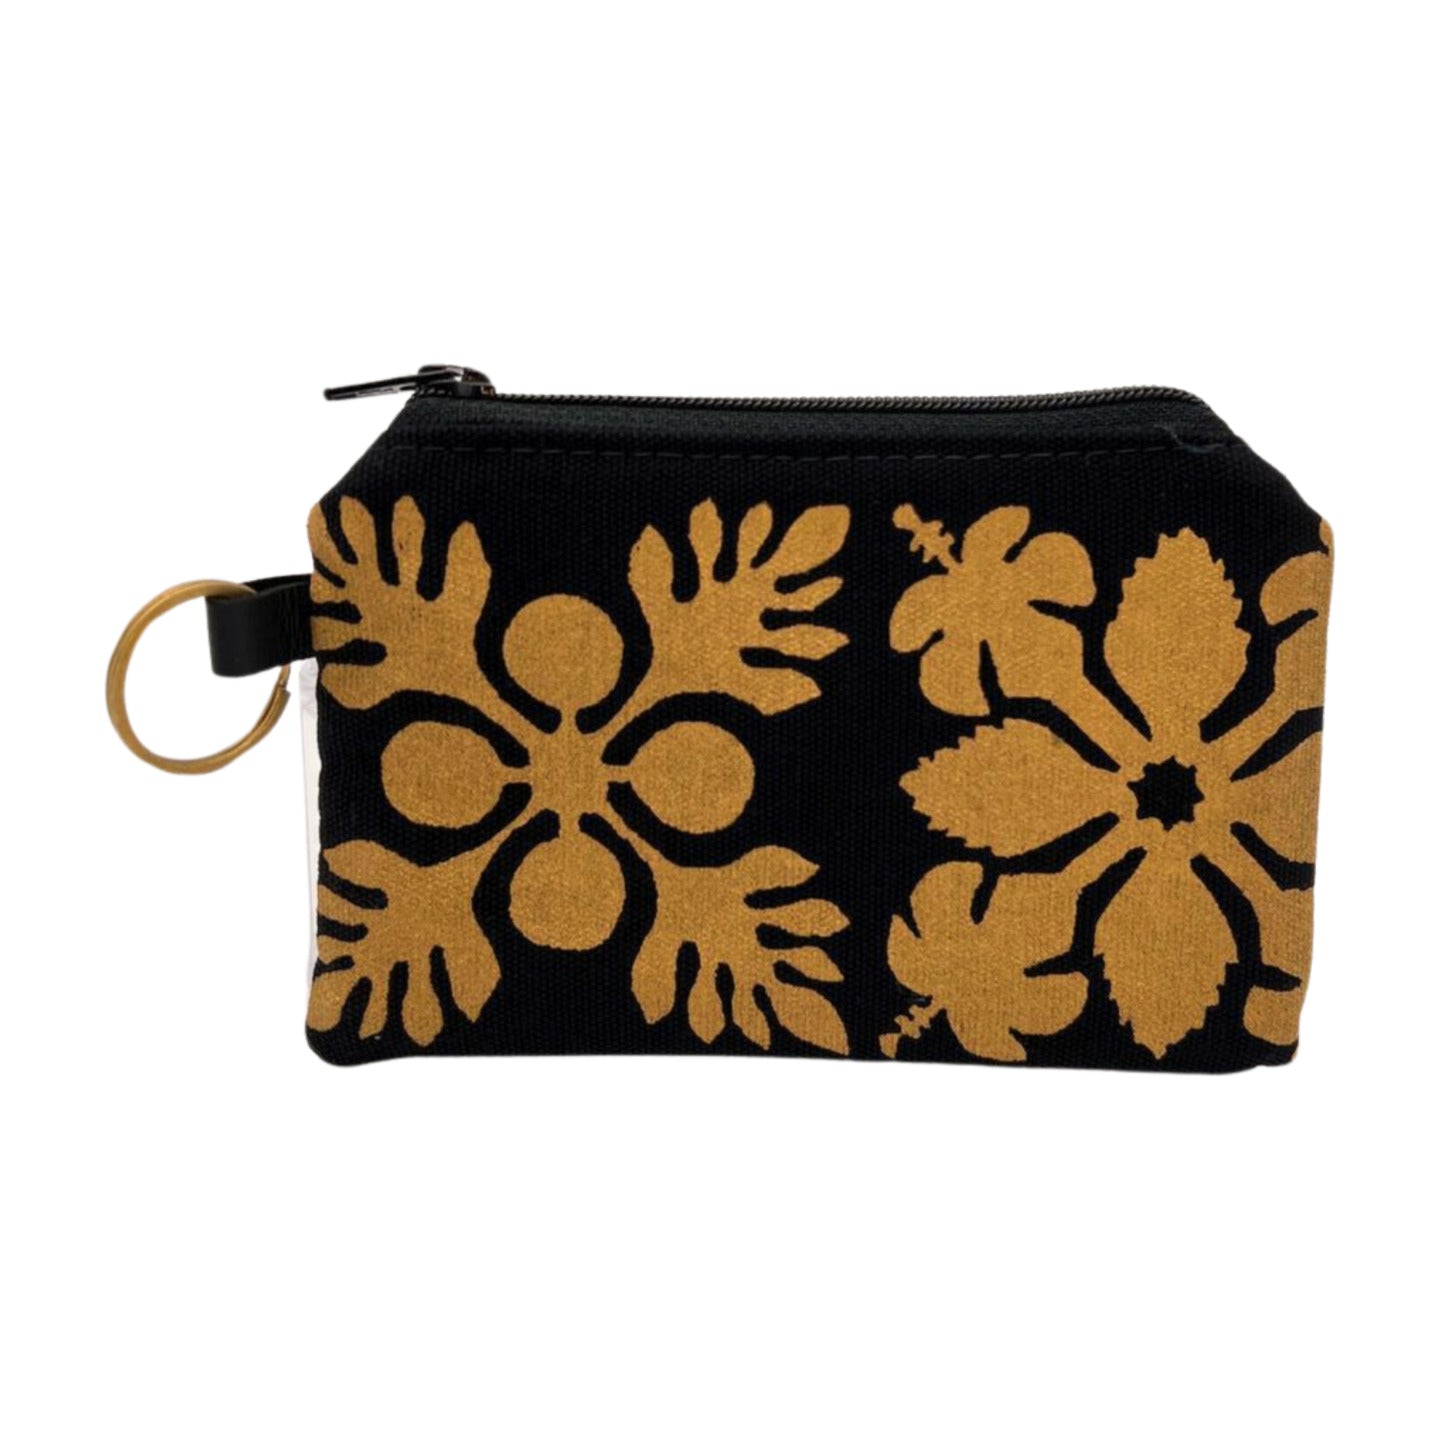 Pop-Up Mākeke - A Maui Day Original Handbags - Handprinted Mini Handbag - Gold Quilt on Black Canvas - Front View